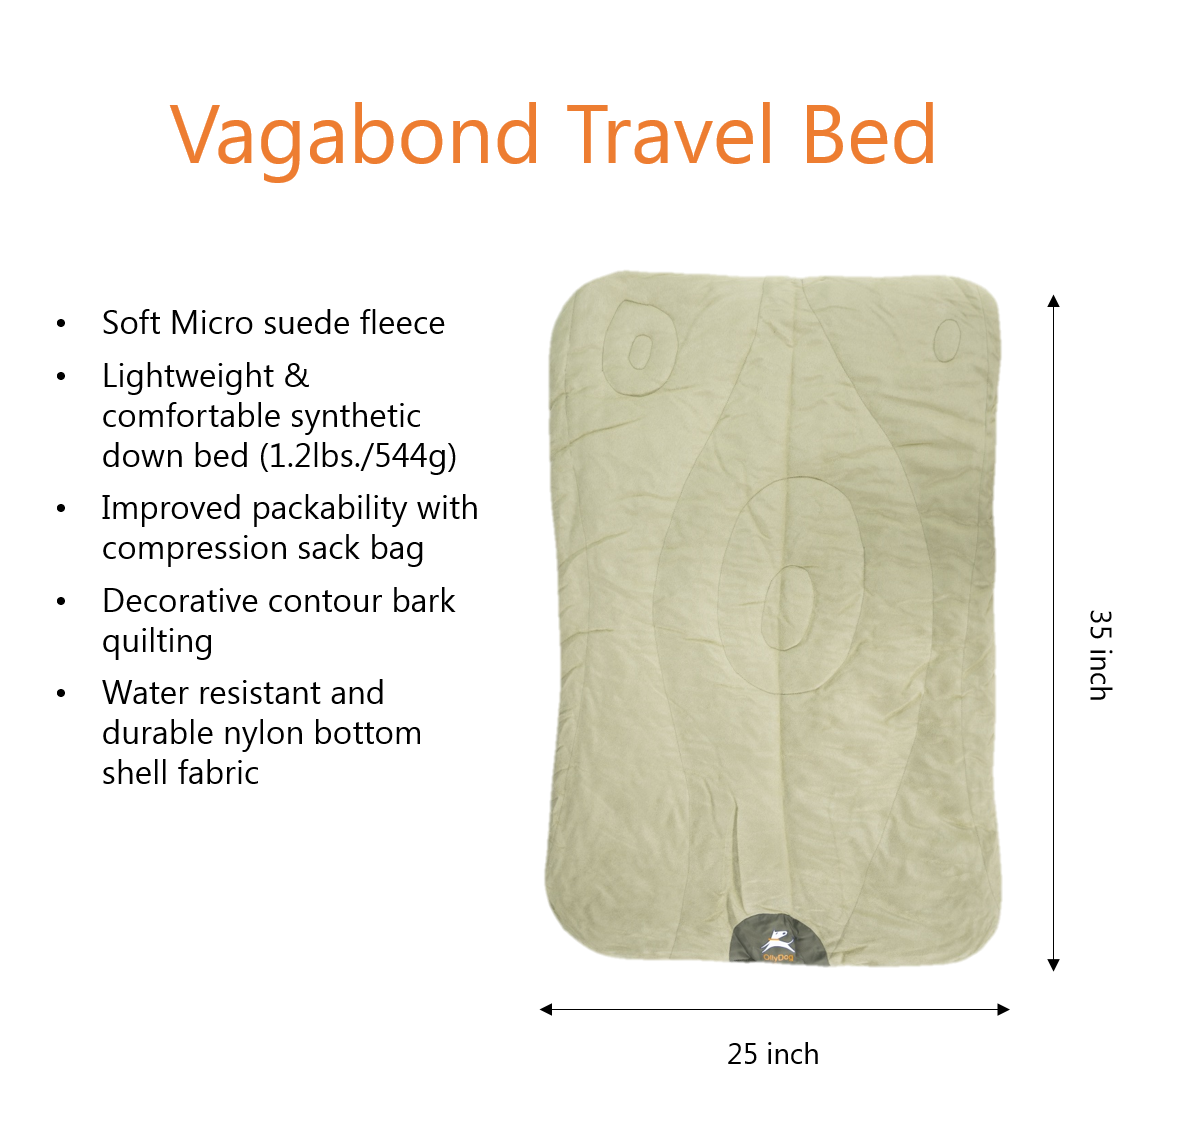 Vagabond Travel Bed